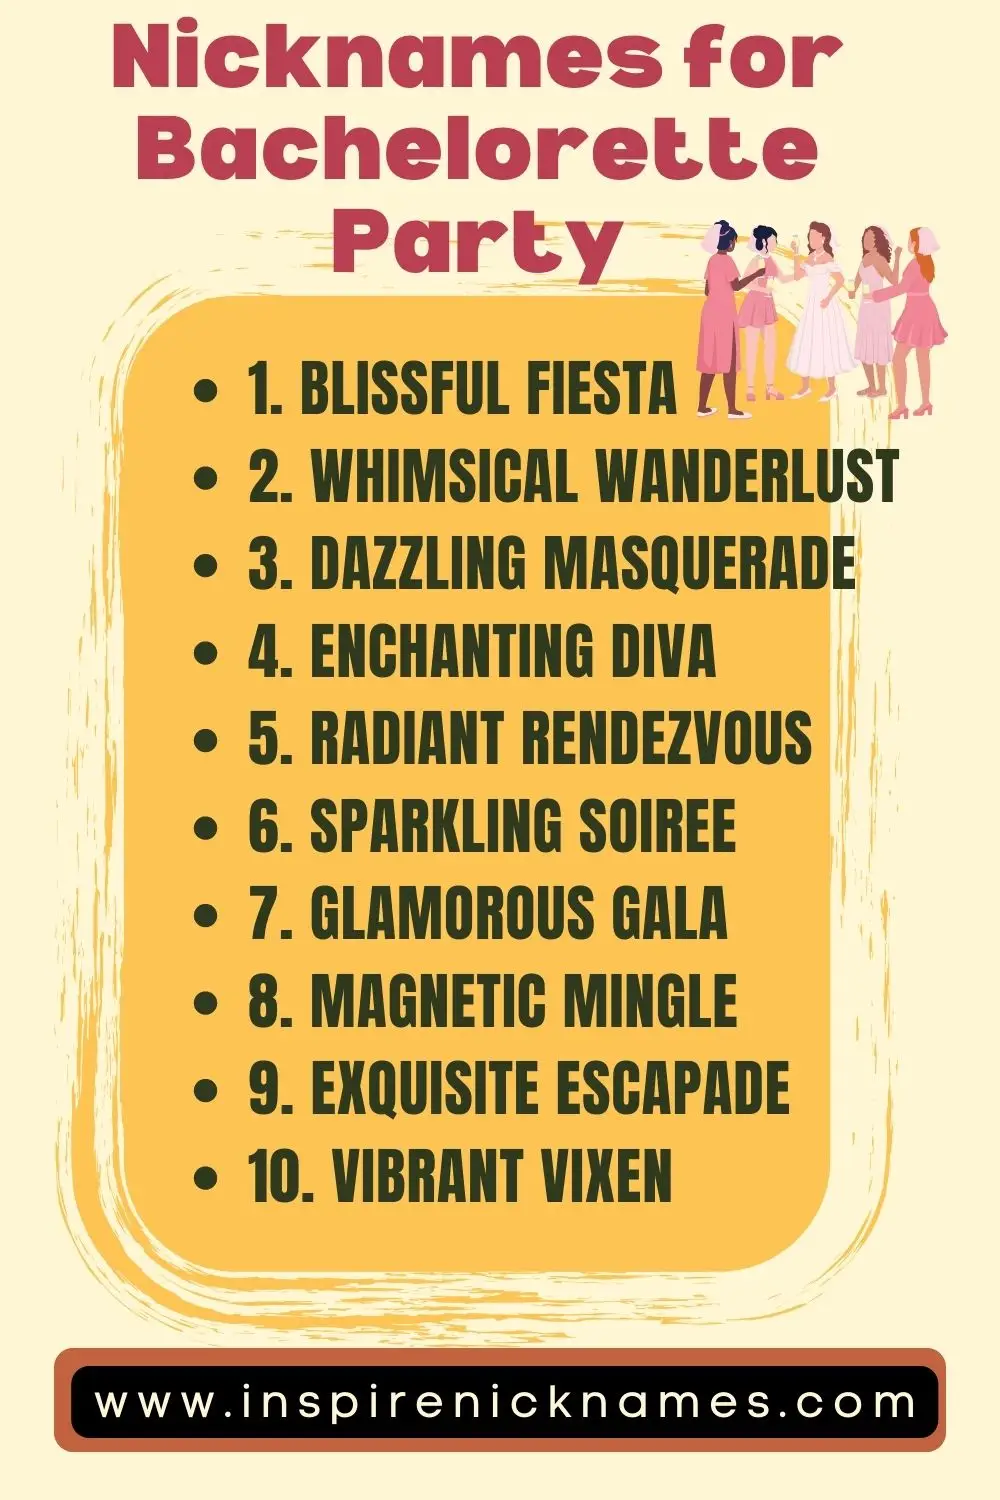 nicknames for bachelorette party list ideas